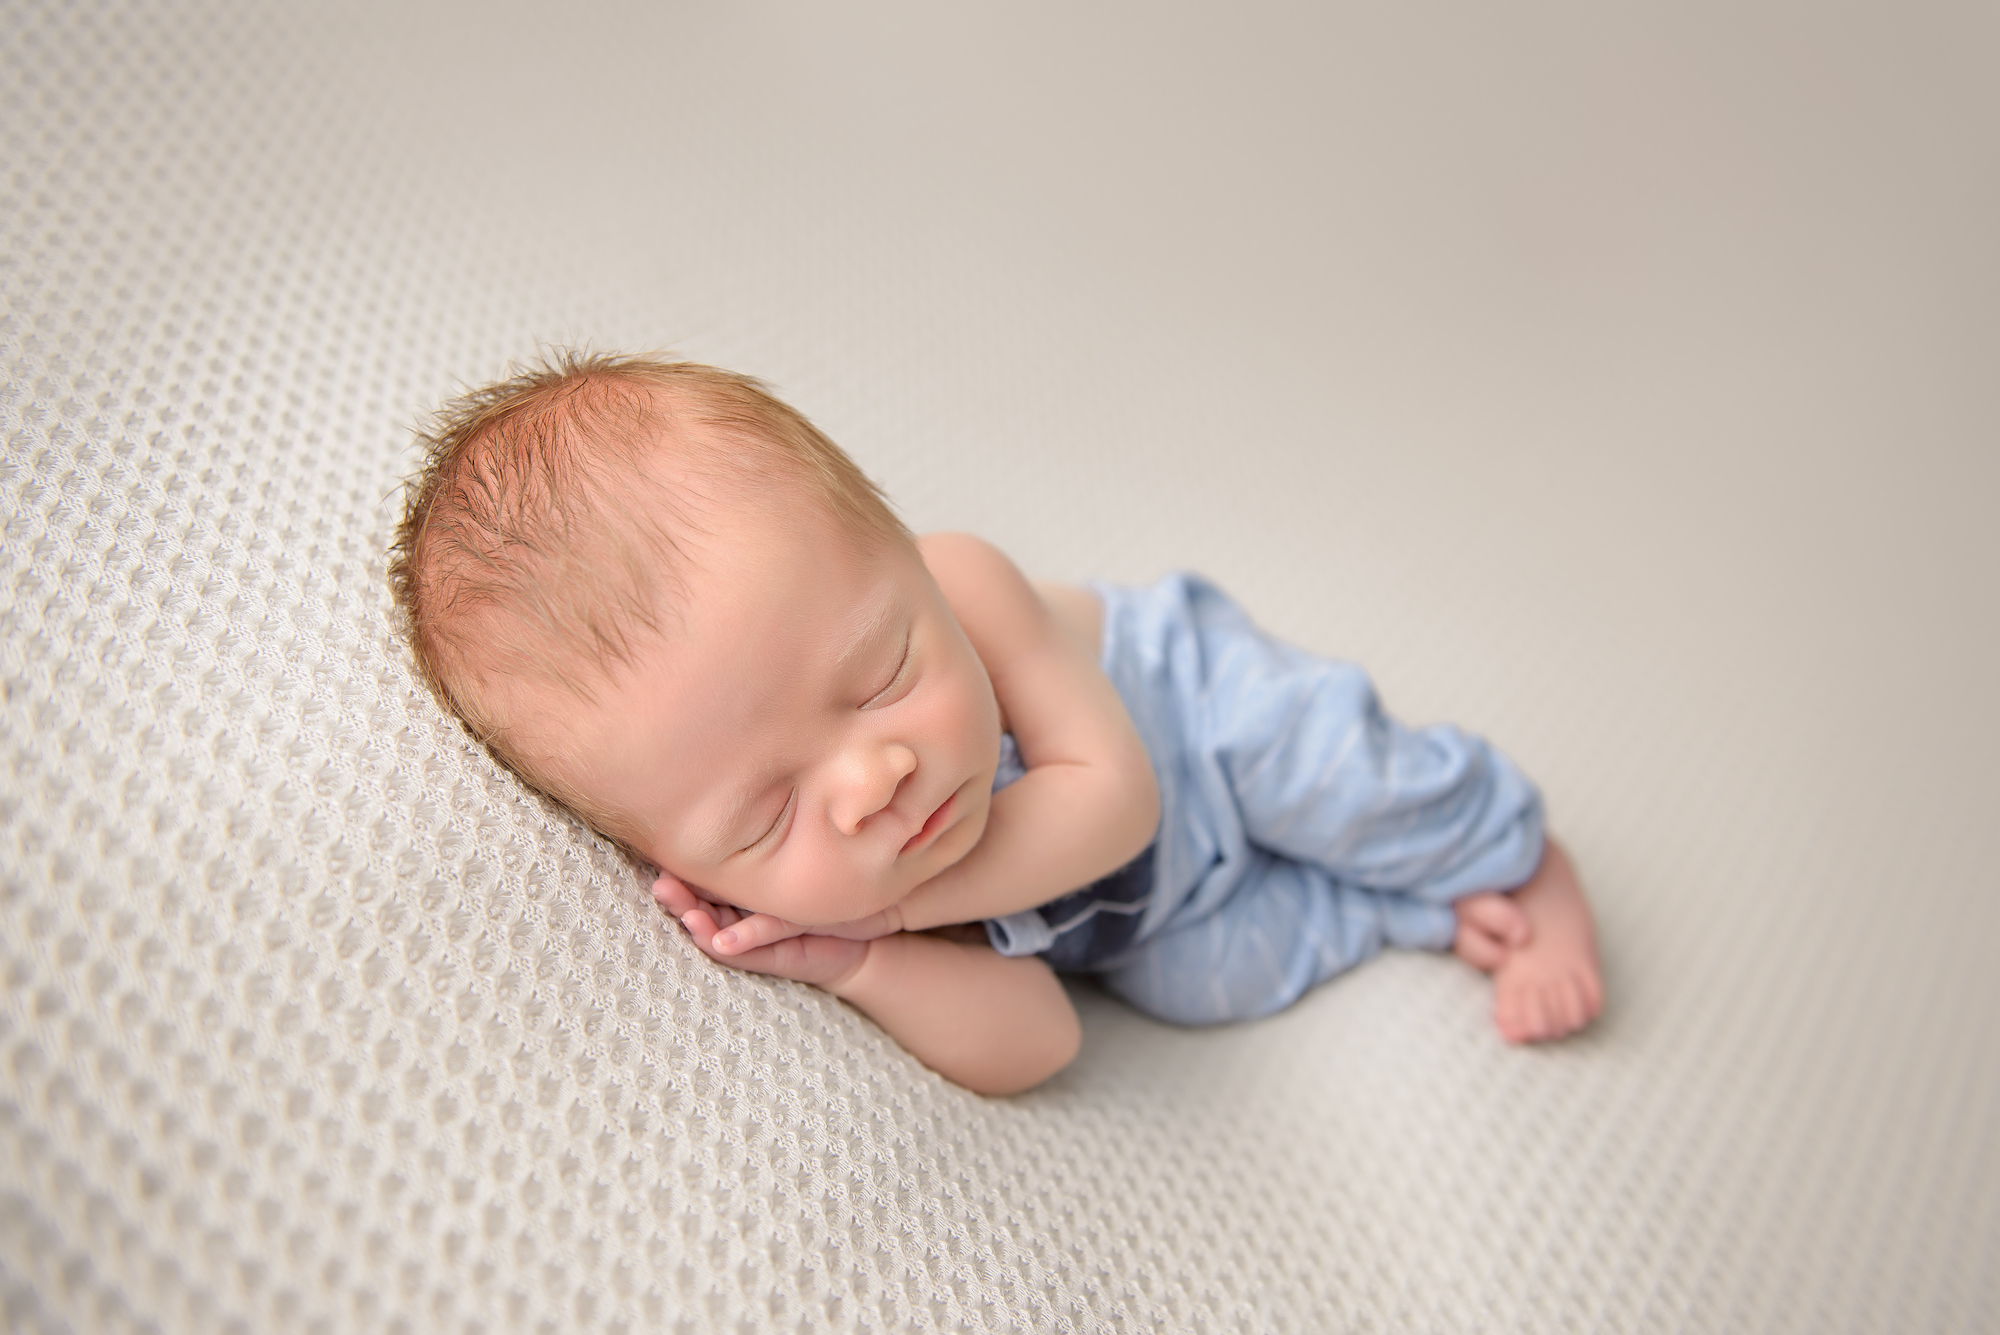 Newborn Photography Baby Sleeping On His Side